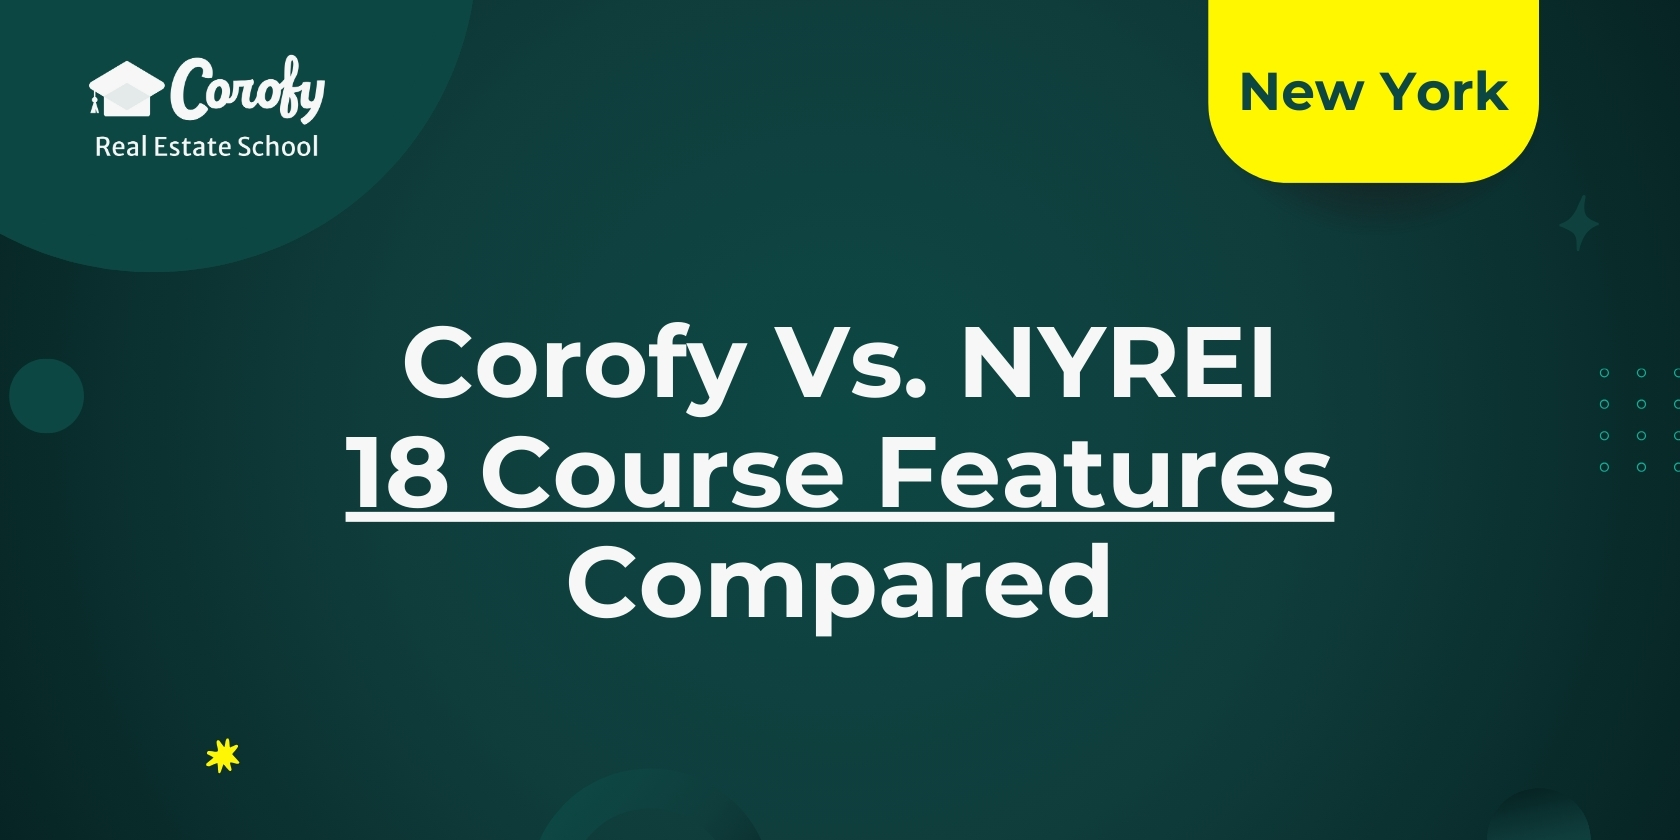 Real Estate U vs NYREI - 18 Course Features Compared